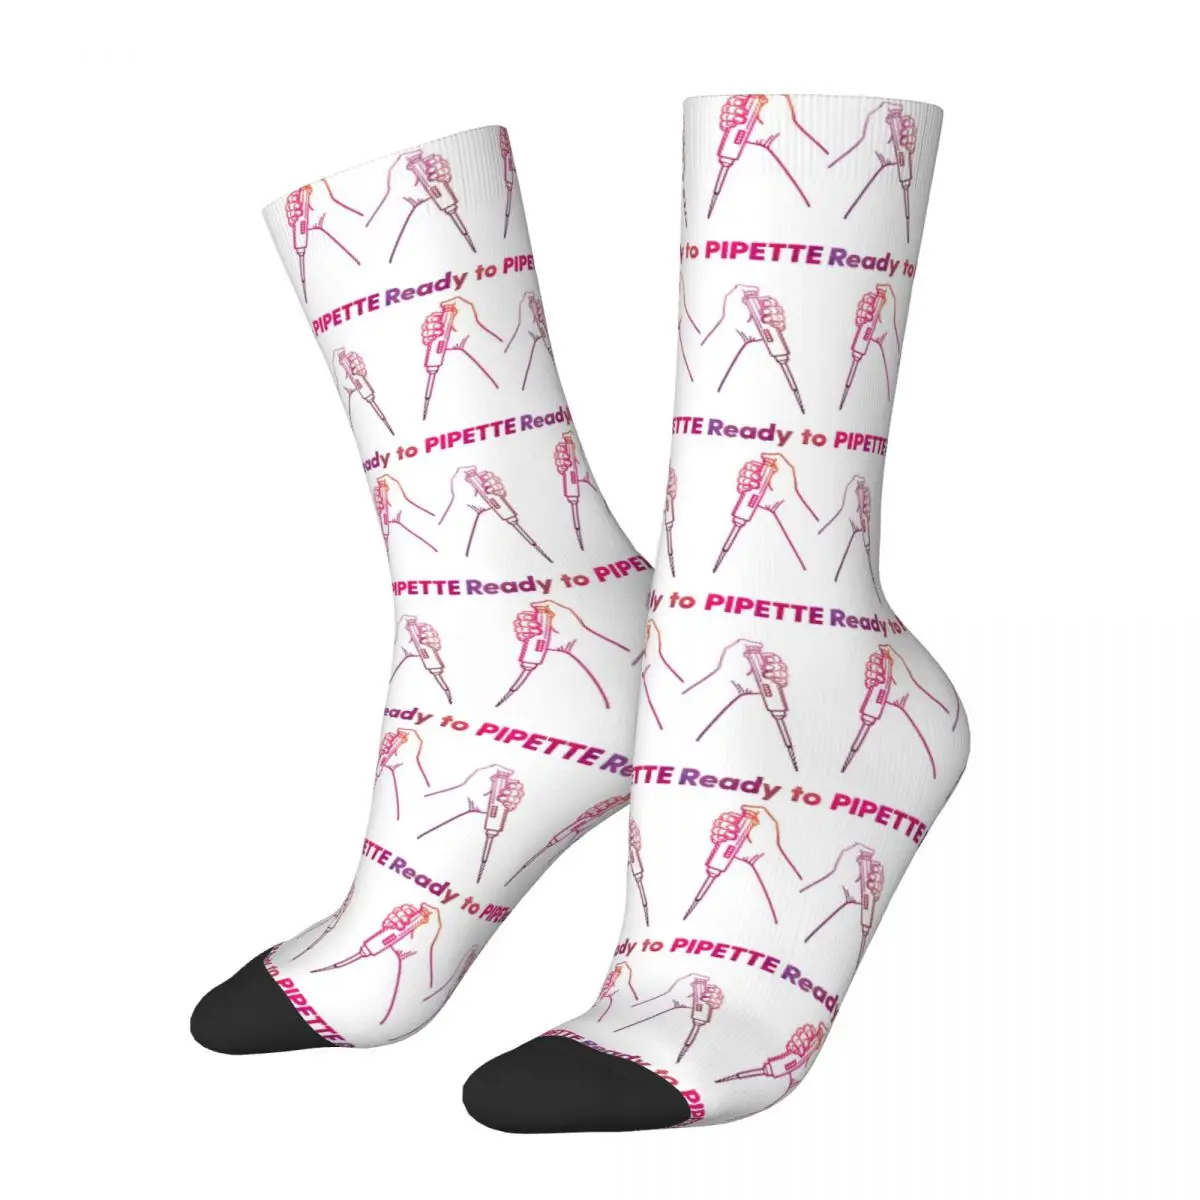 

Ready To PIPETTE Socks Harajuku Super Soft Stockings All Season Long Socks Accessories for Unisex Birthday Present